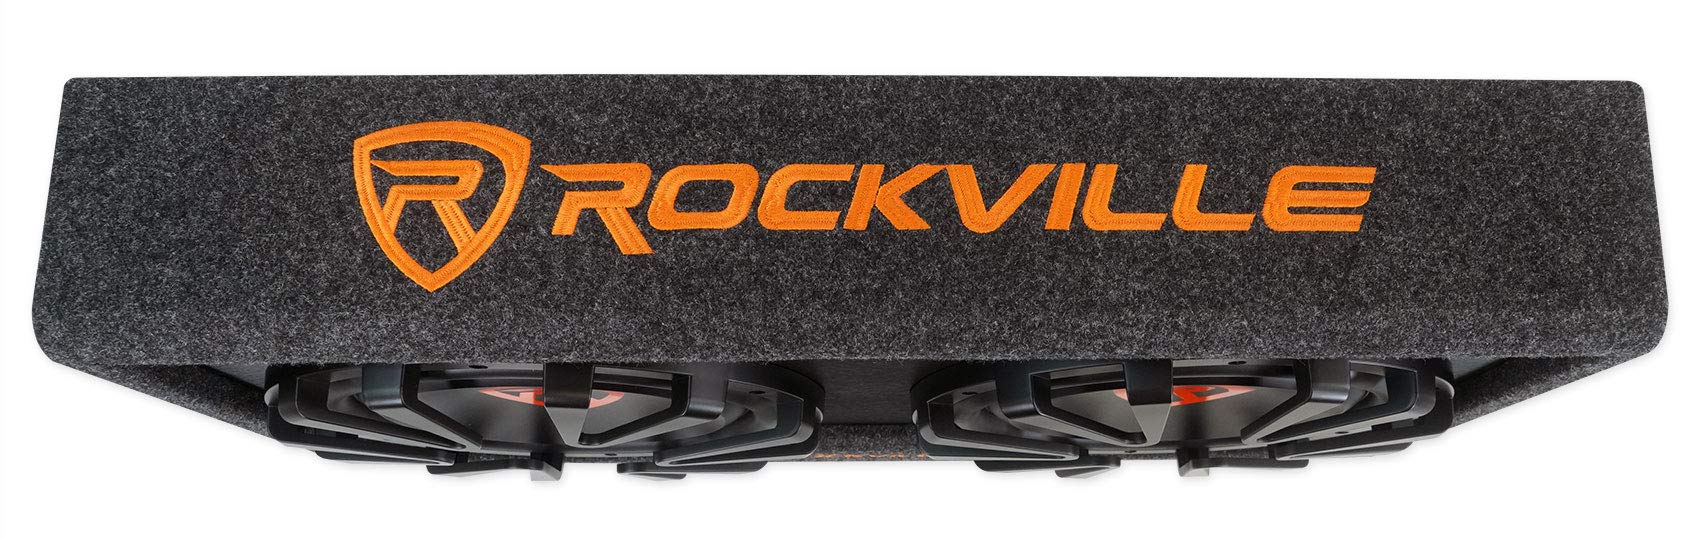 Rockville RG212CA Dual 12 inches Slim Vented Powered Car Subwoofer Enclosure 2000 Watt, Black